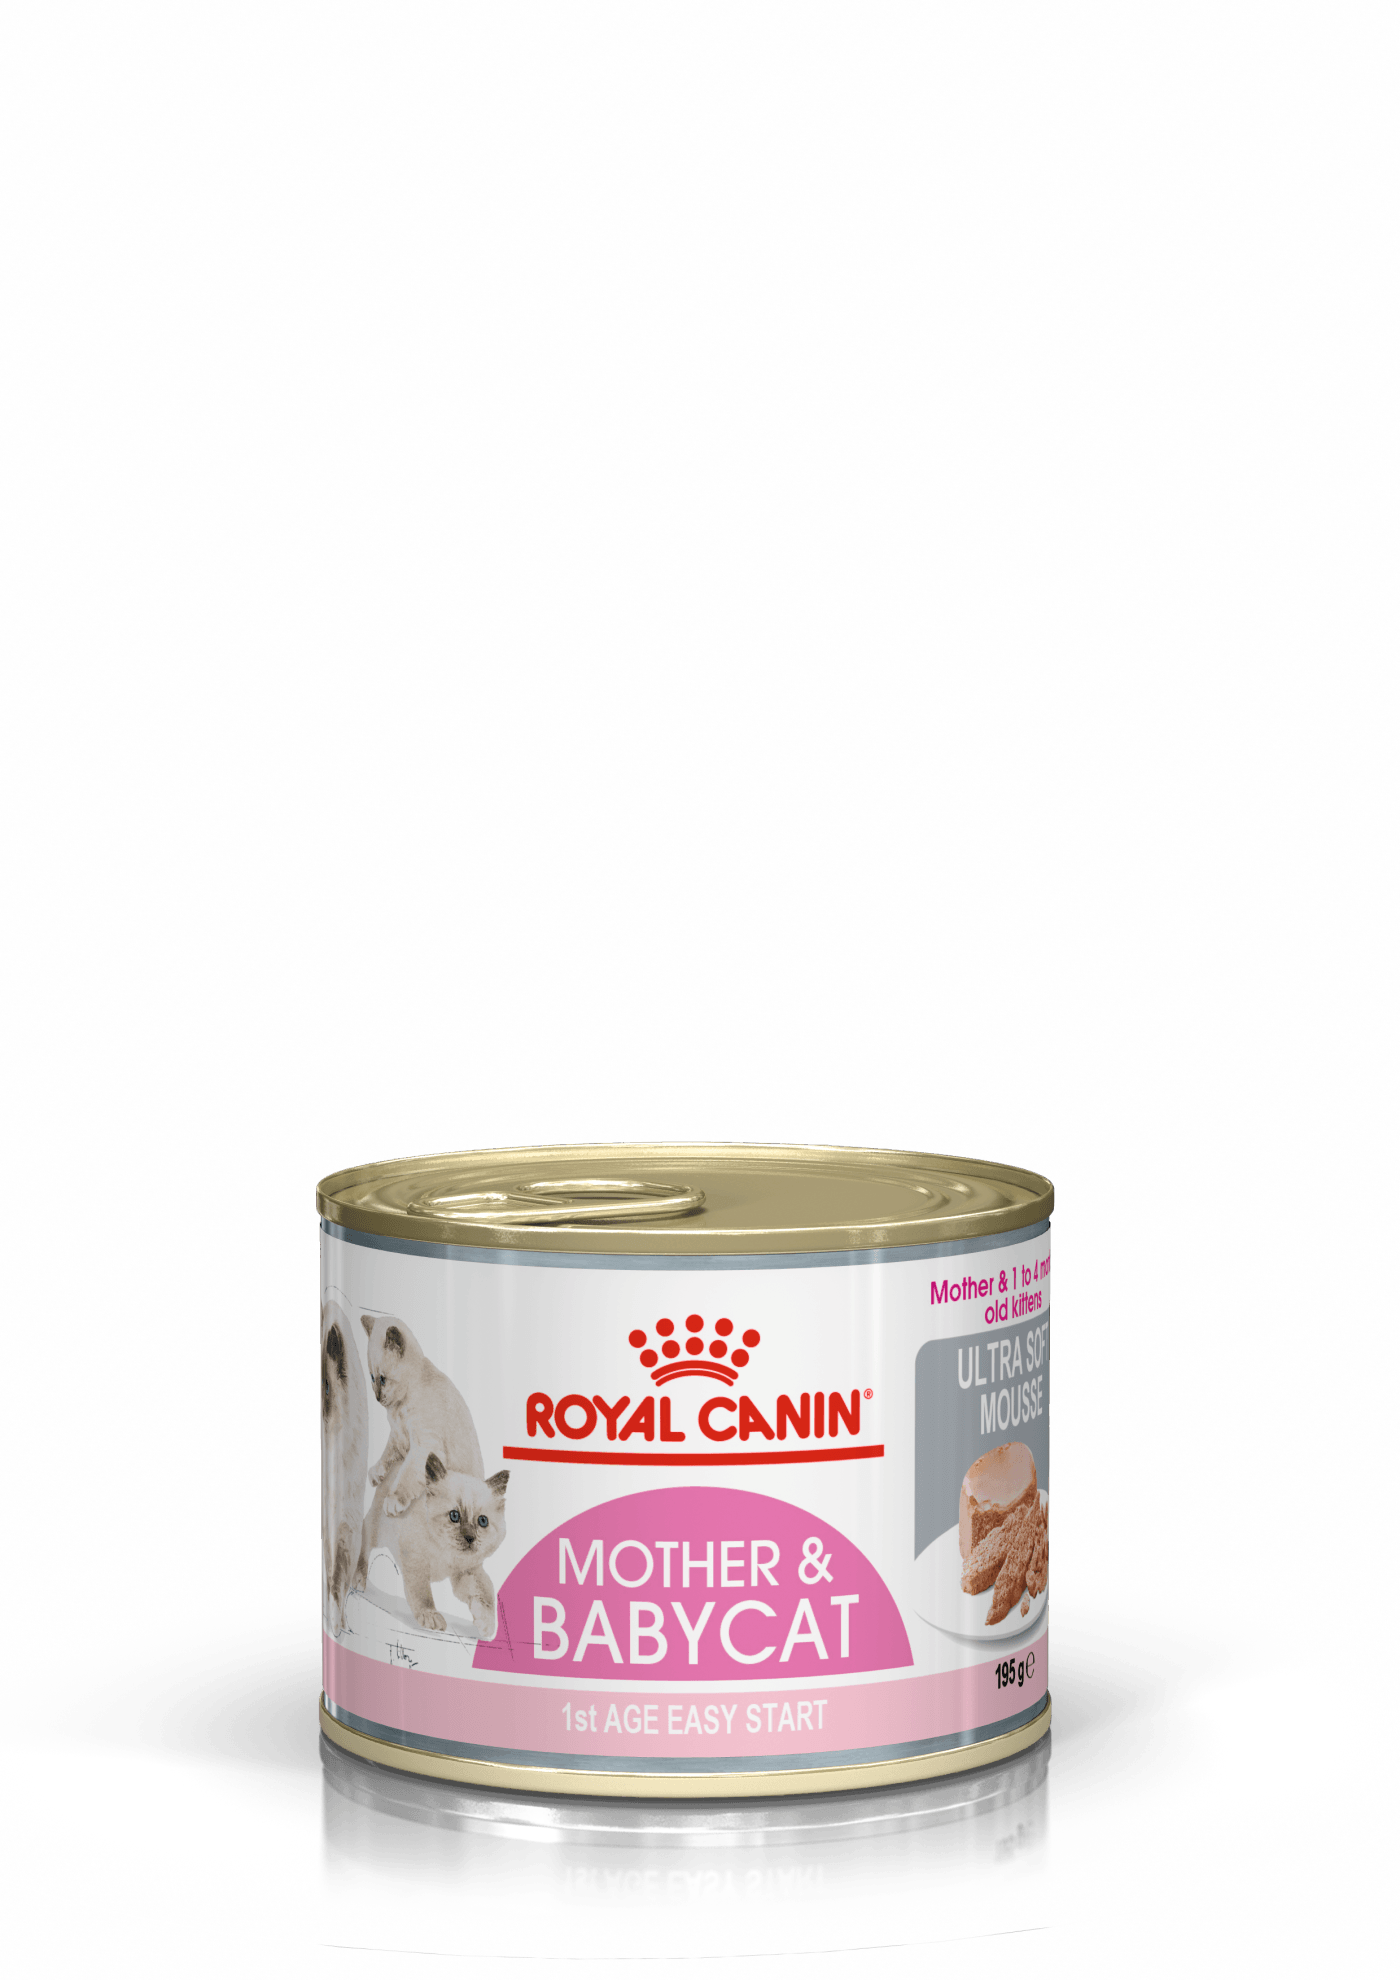 【Royal Canin】法國皇家貓糧 - 離乳貓及母貓營養主食罐頭195g - Pet Pet Plaza